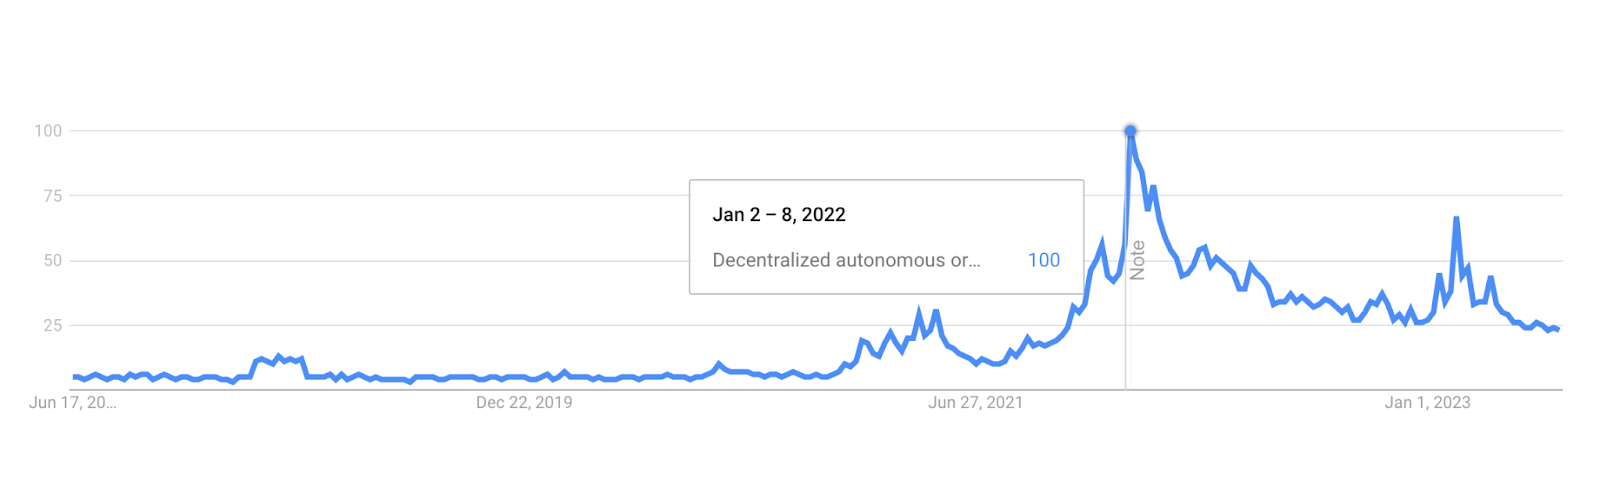 Google Trends DAO topic interest